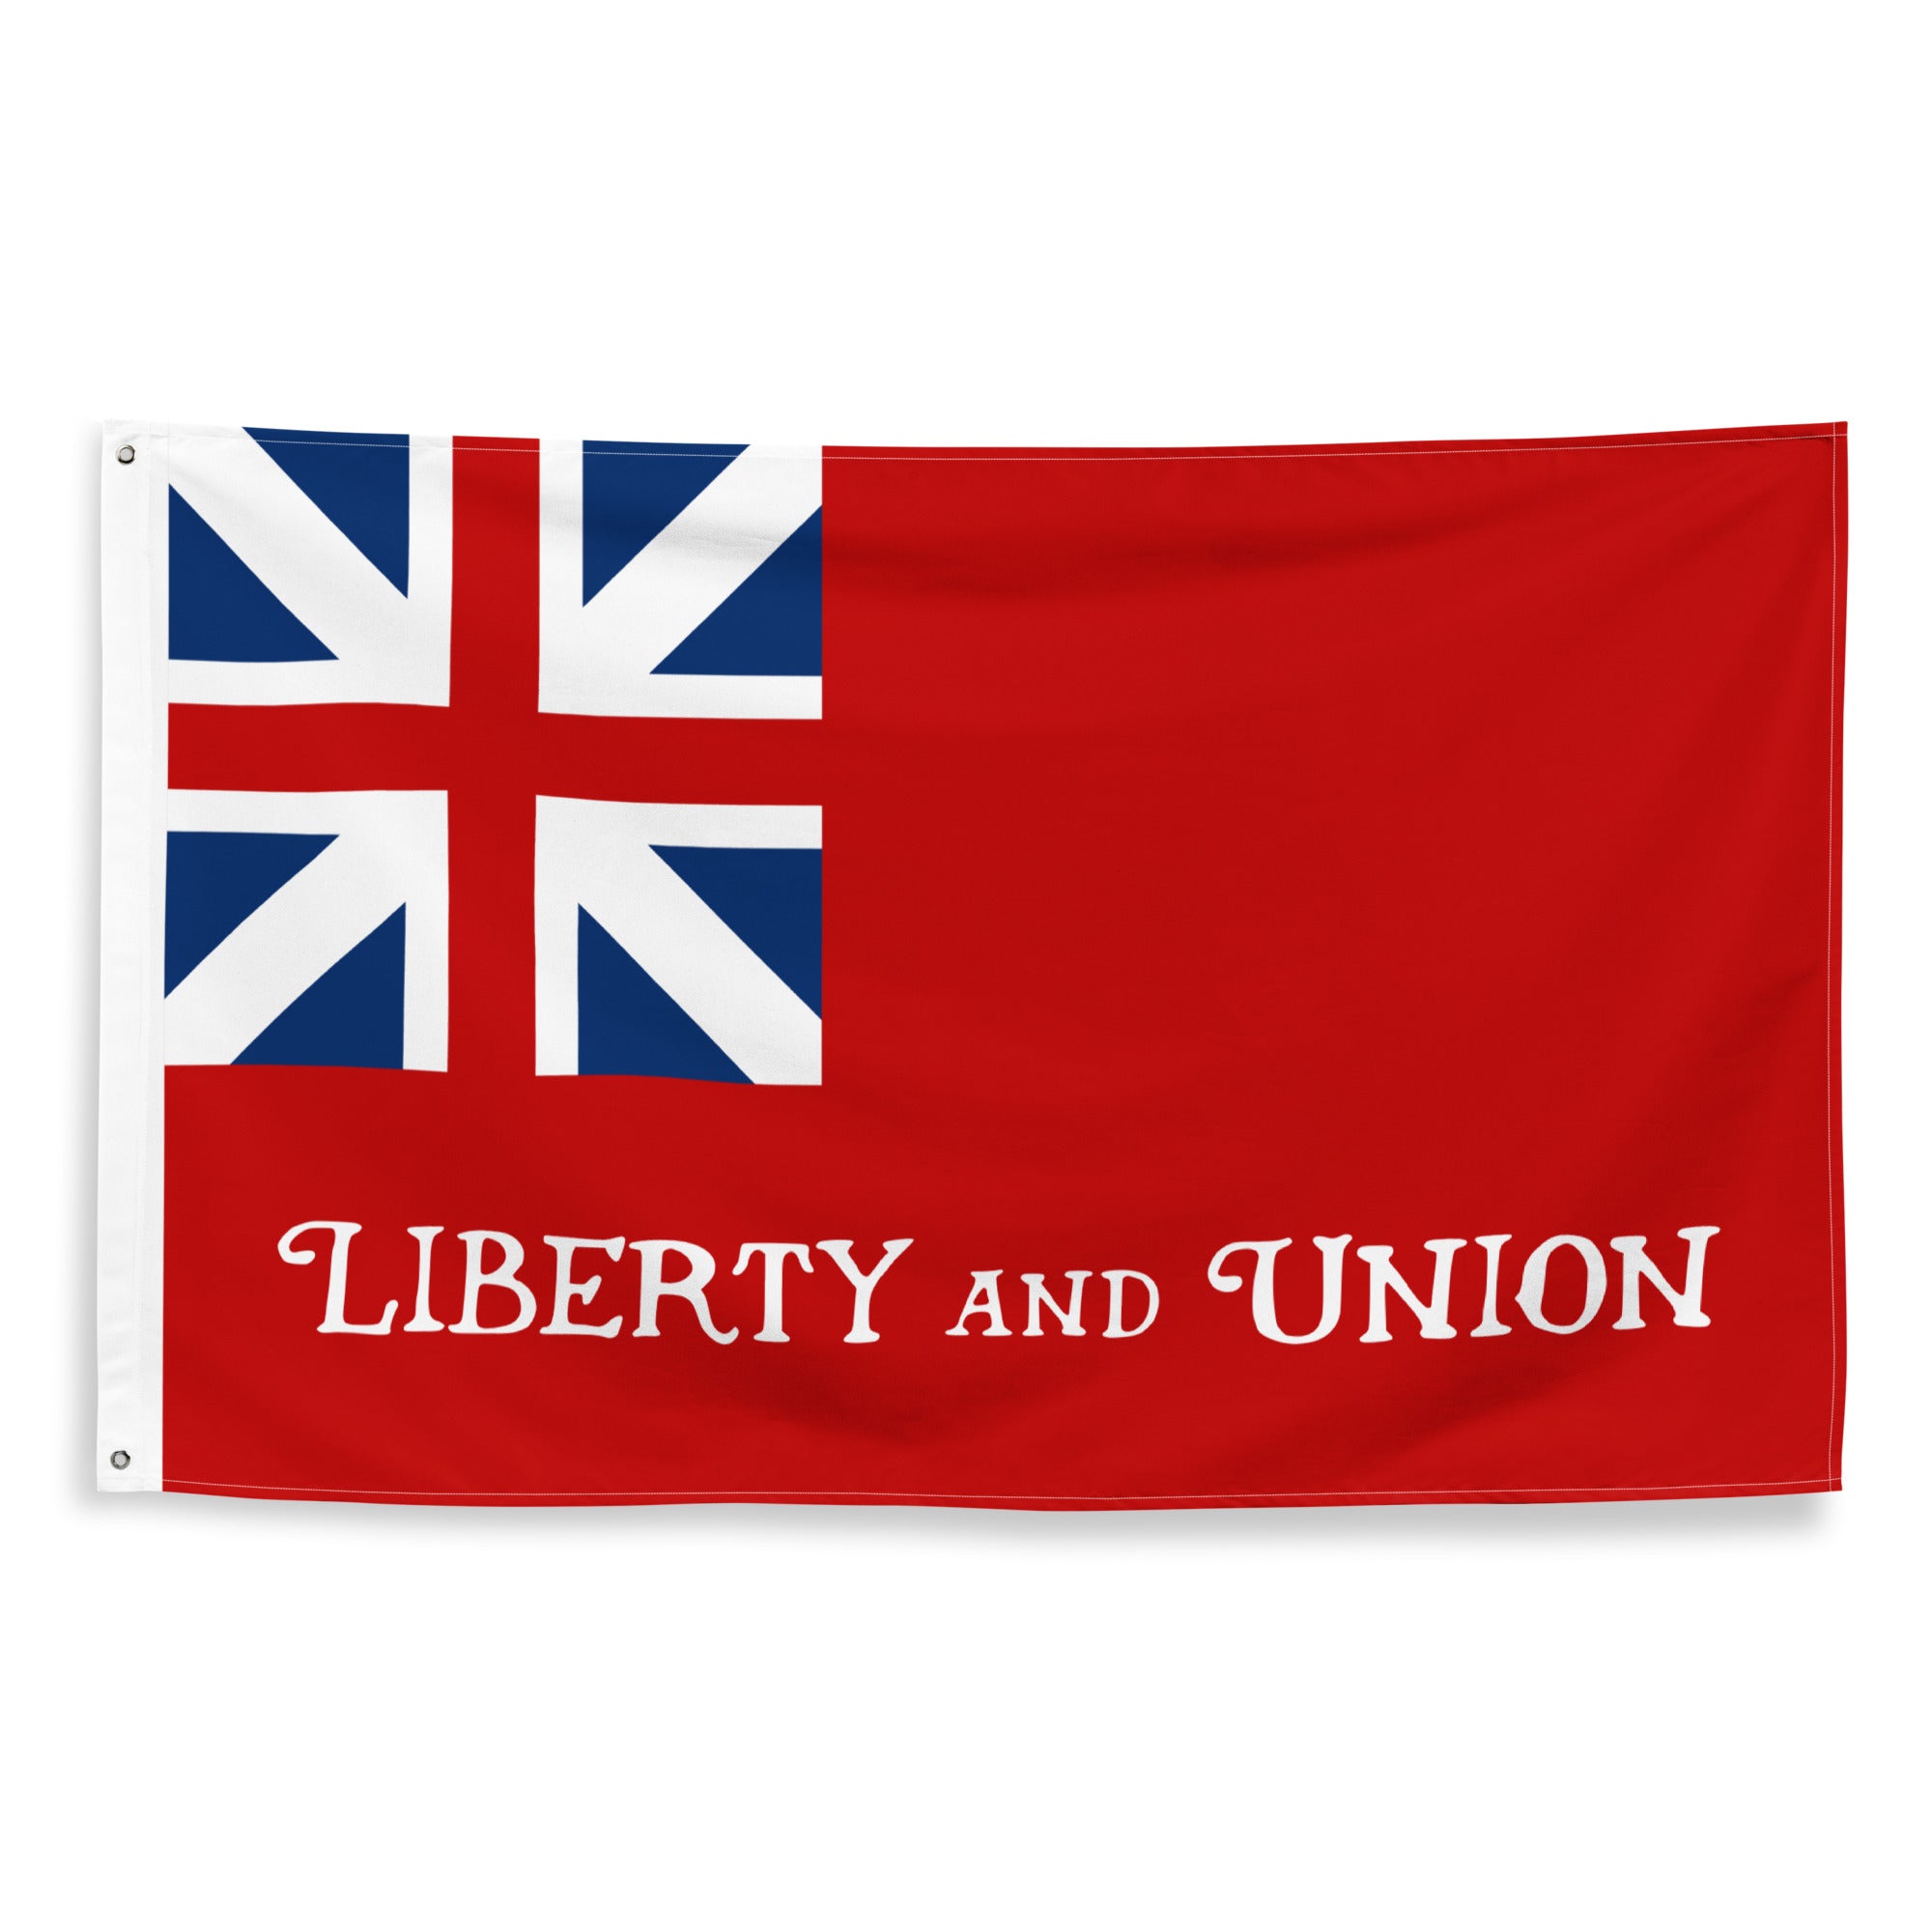 The Taunton Sons of Liberty Flag